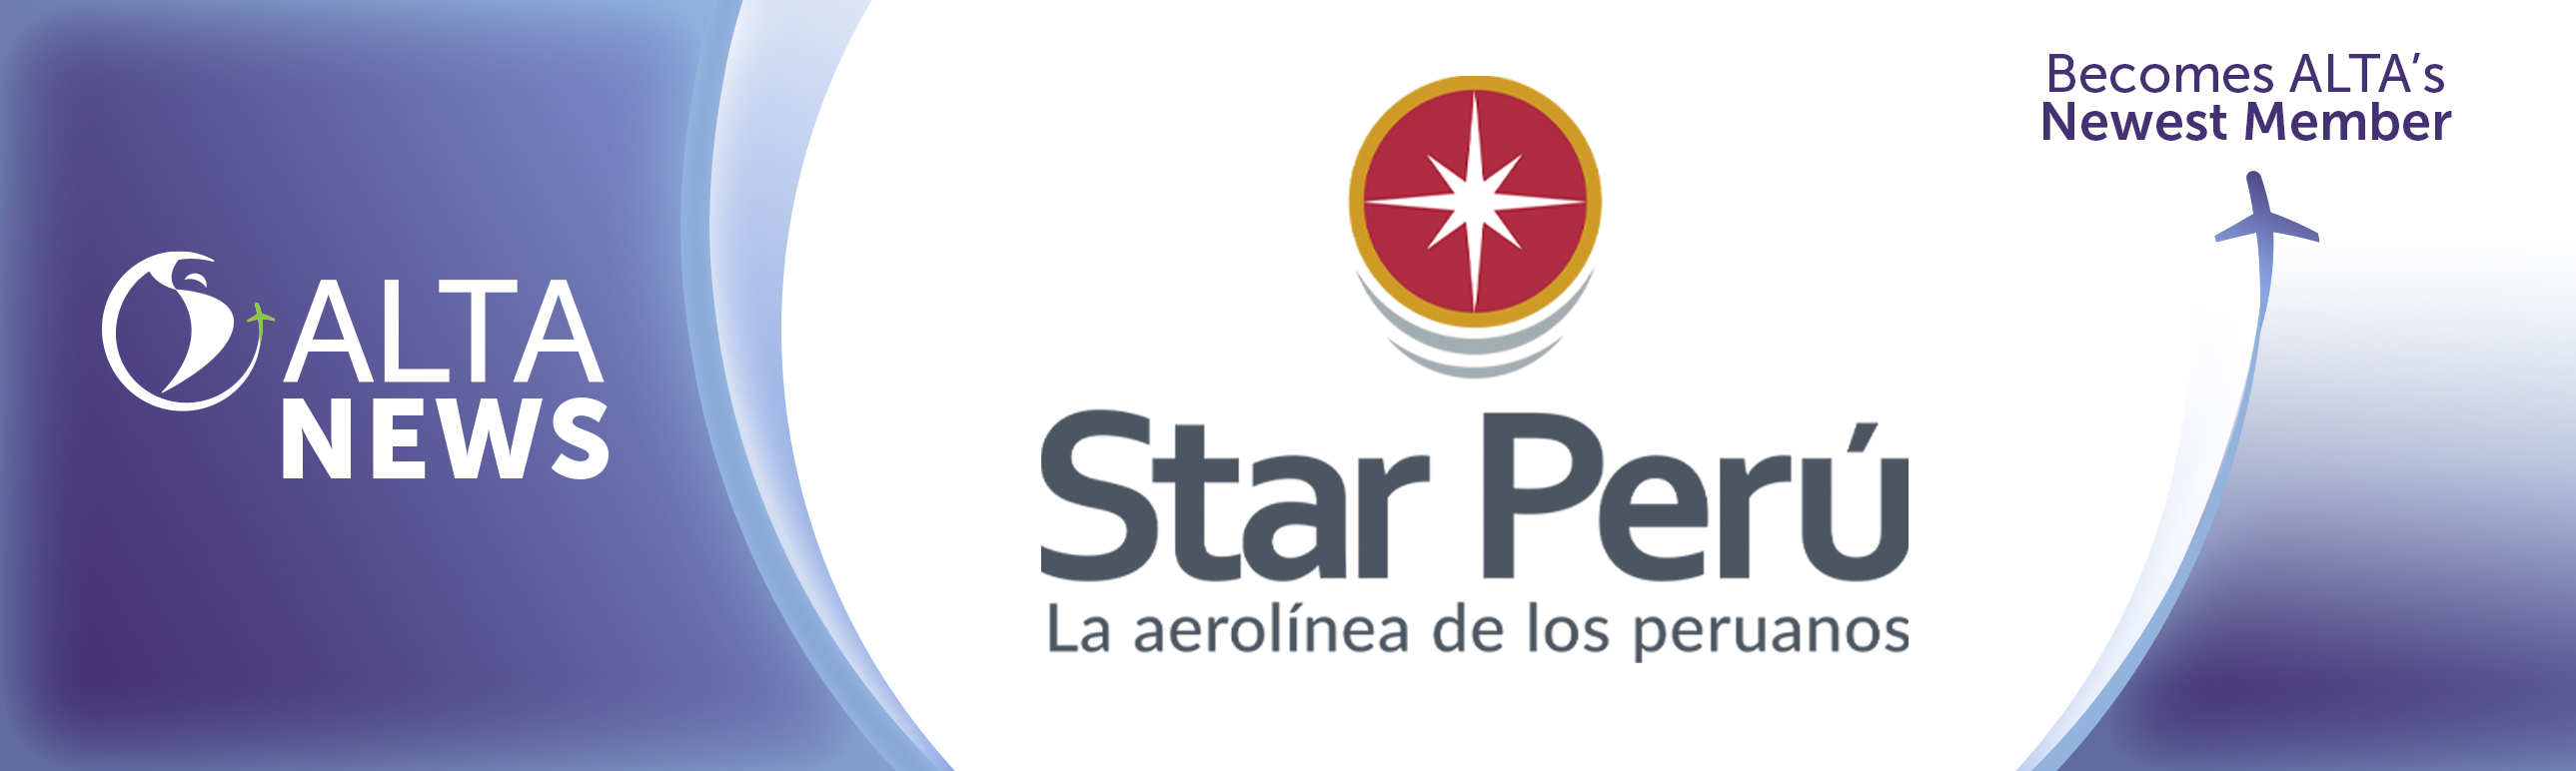 ALTA NEWS - ALTA welcomes a new airline: Star Peru